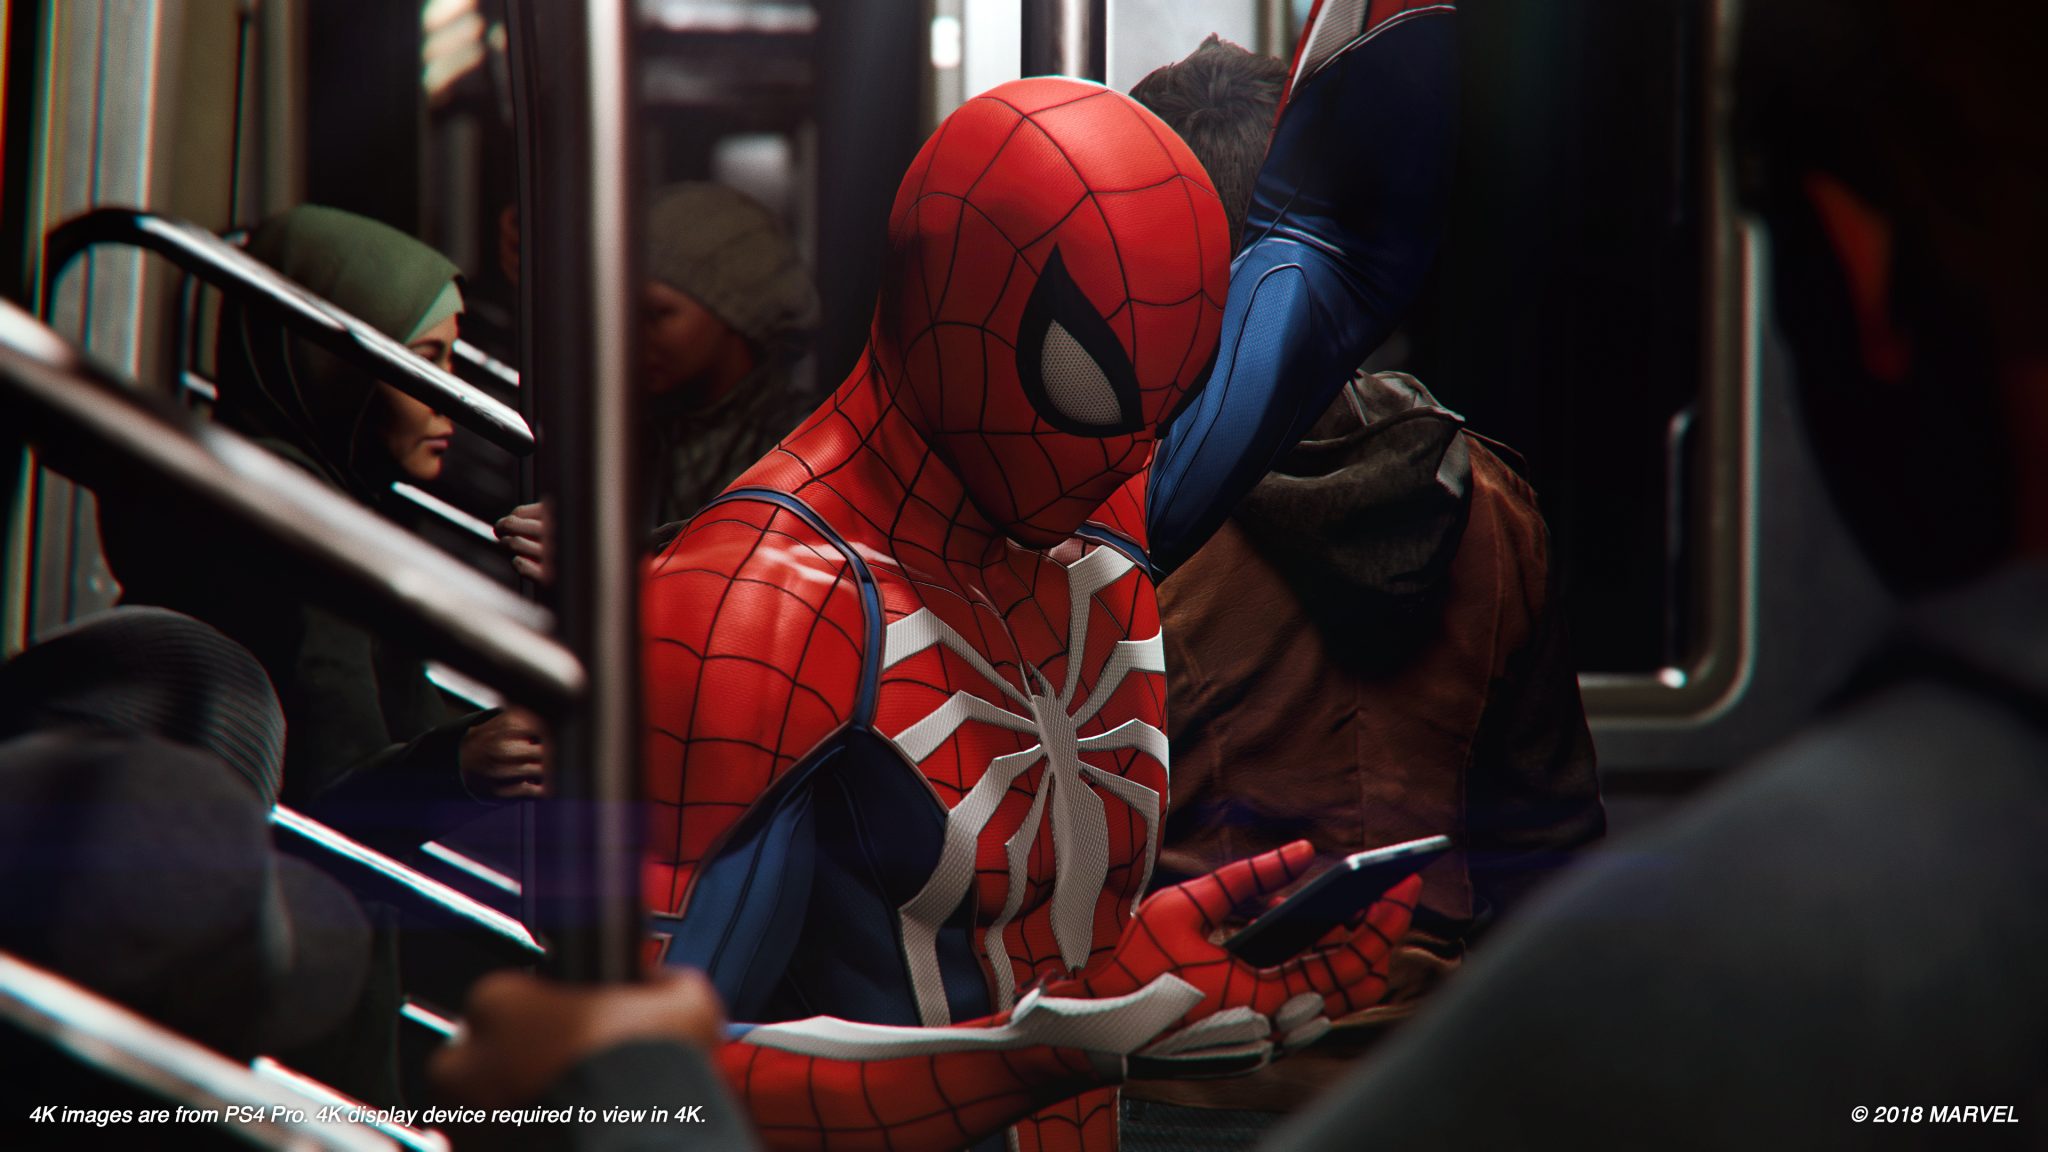 Marvels Spider-Man Marvel's Spider-Man Spiderman Marvel PS4 Pro PlayStation Sony Review Test Kritik Schnellreise